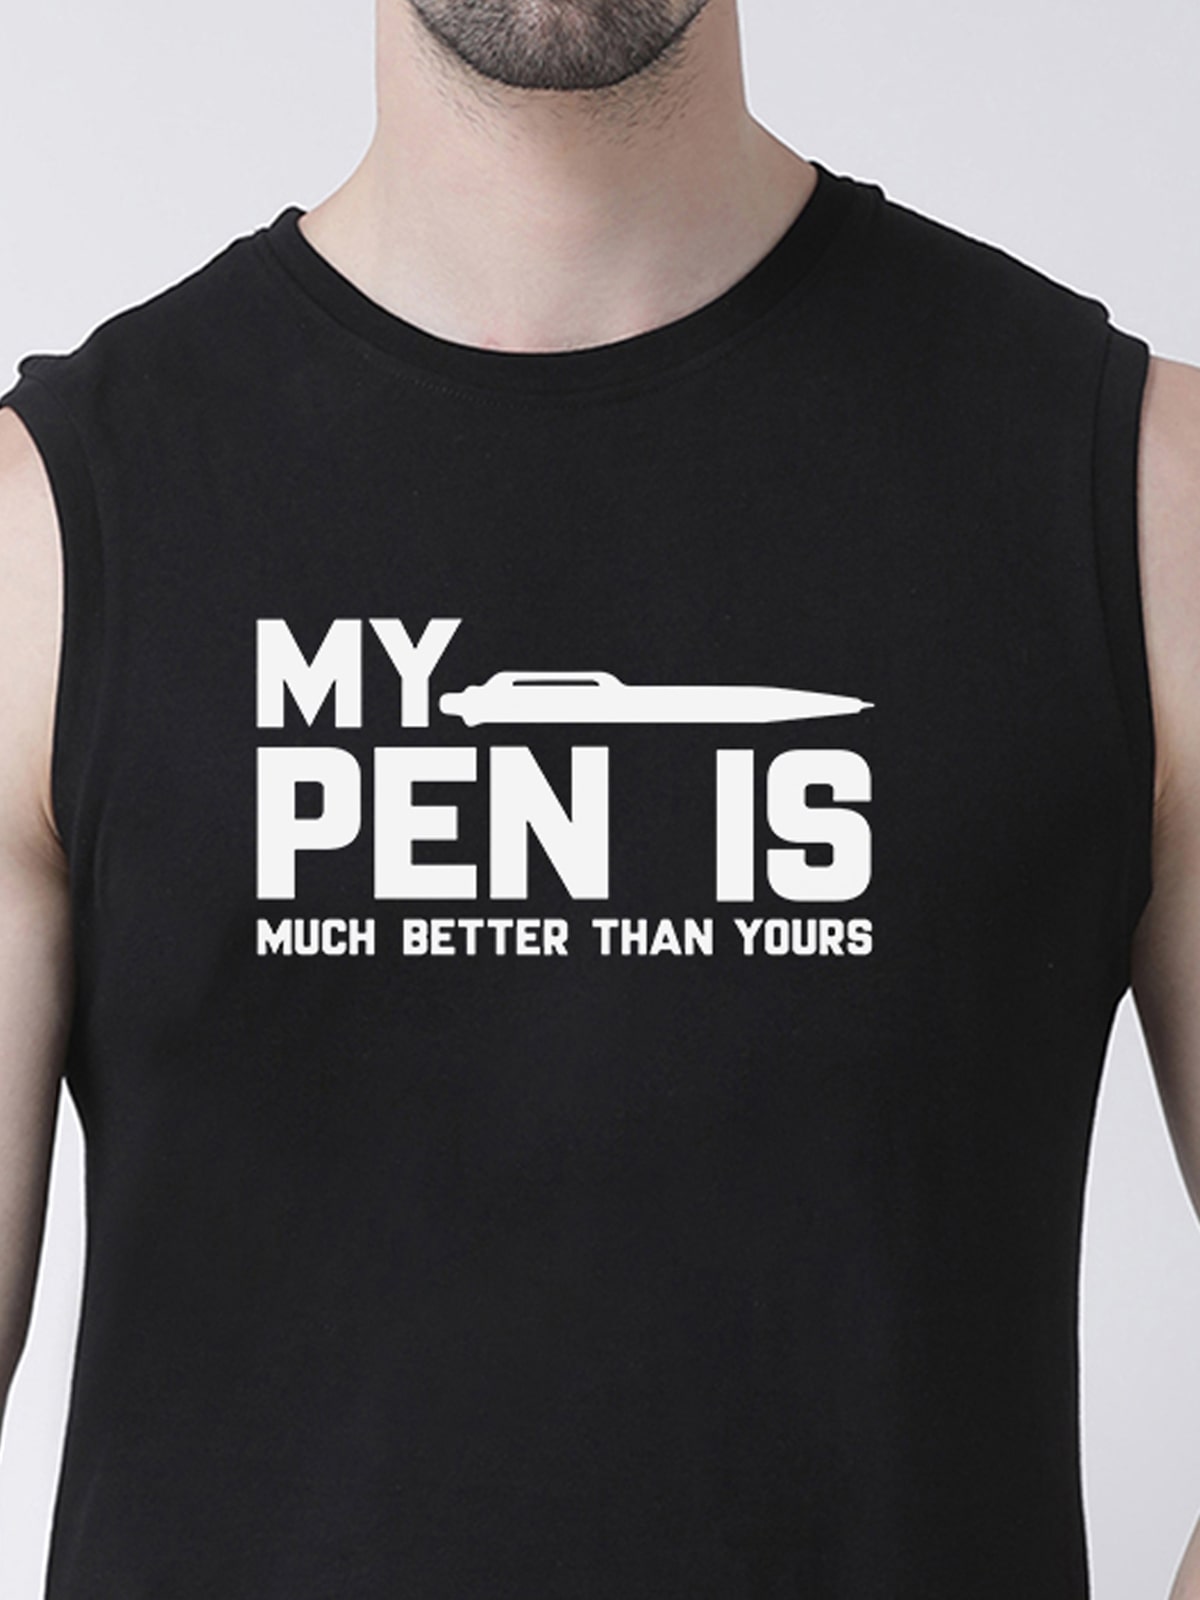 Men My Pen Is Better Than Yours Printed Cotton Gym Vest - Friskers